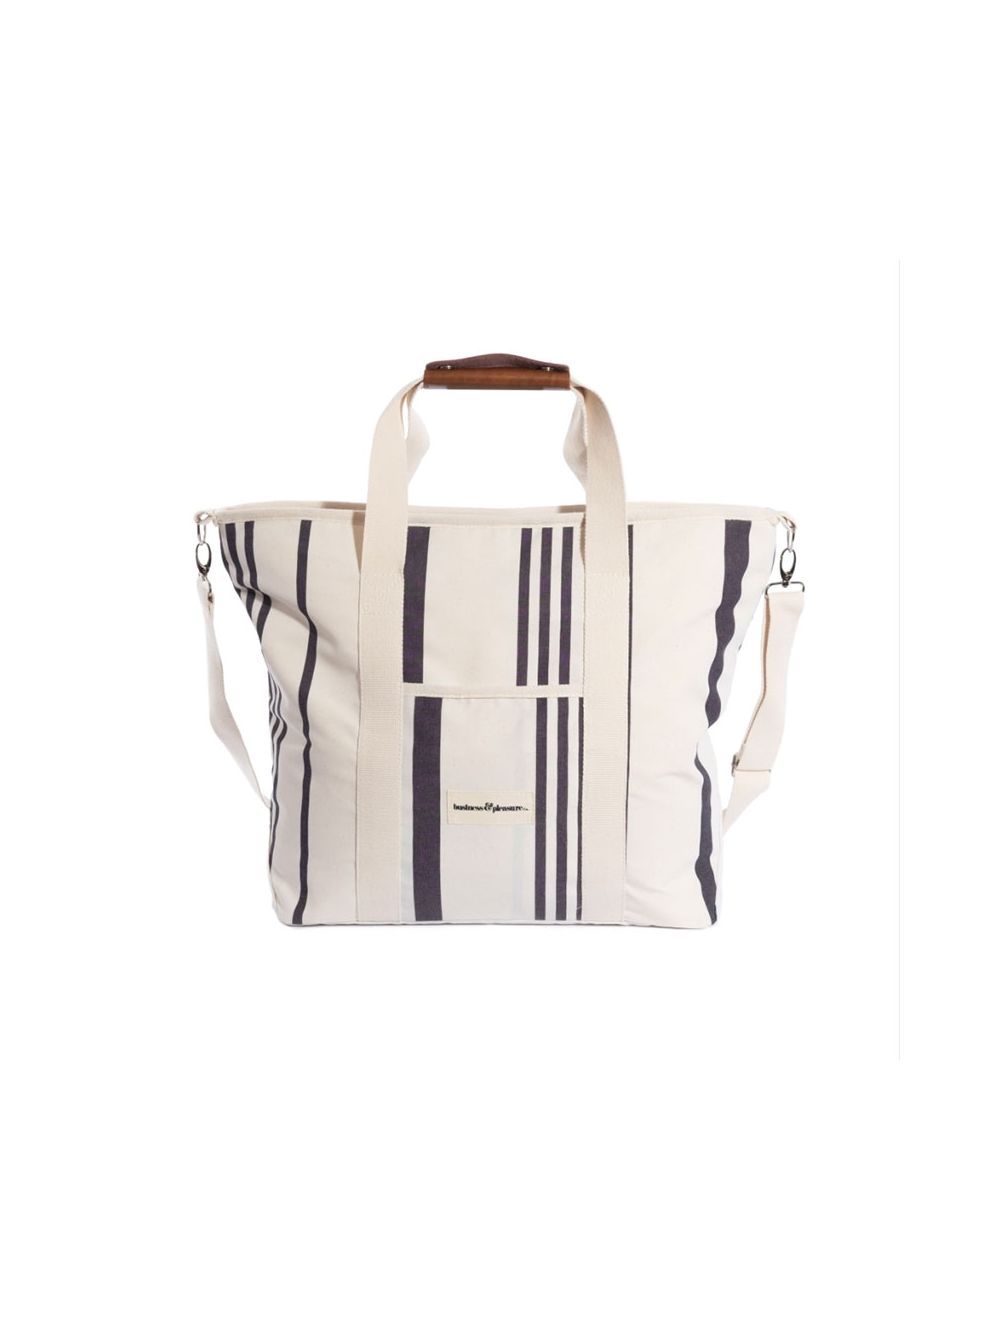 striped handbags - Buy striped handbags with free shipping on